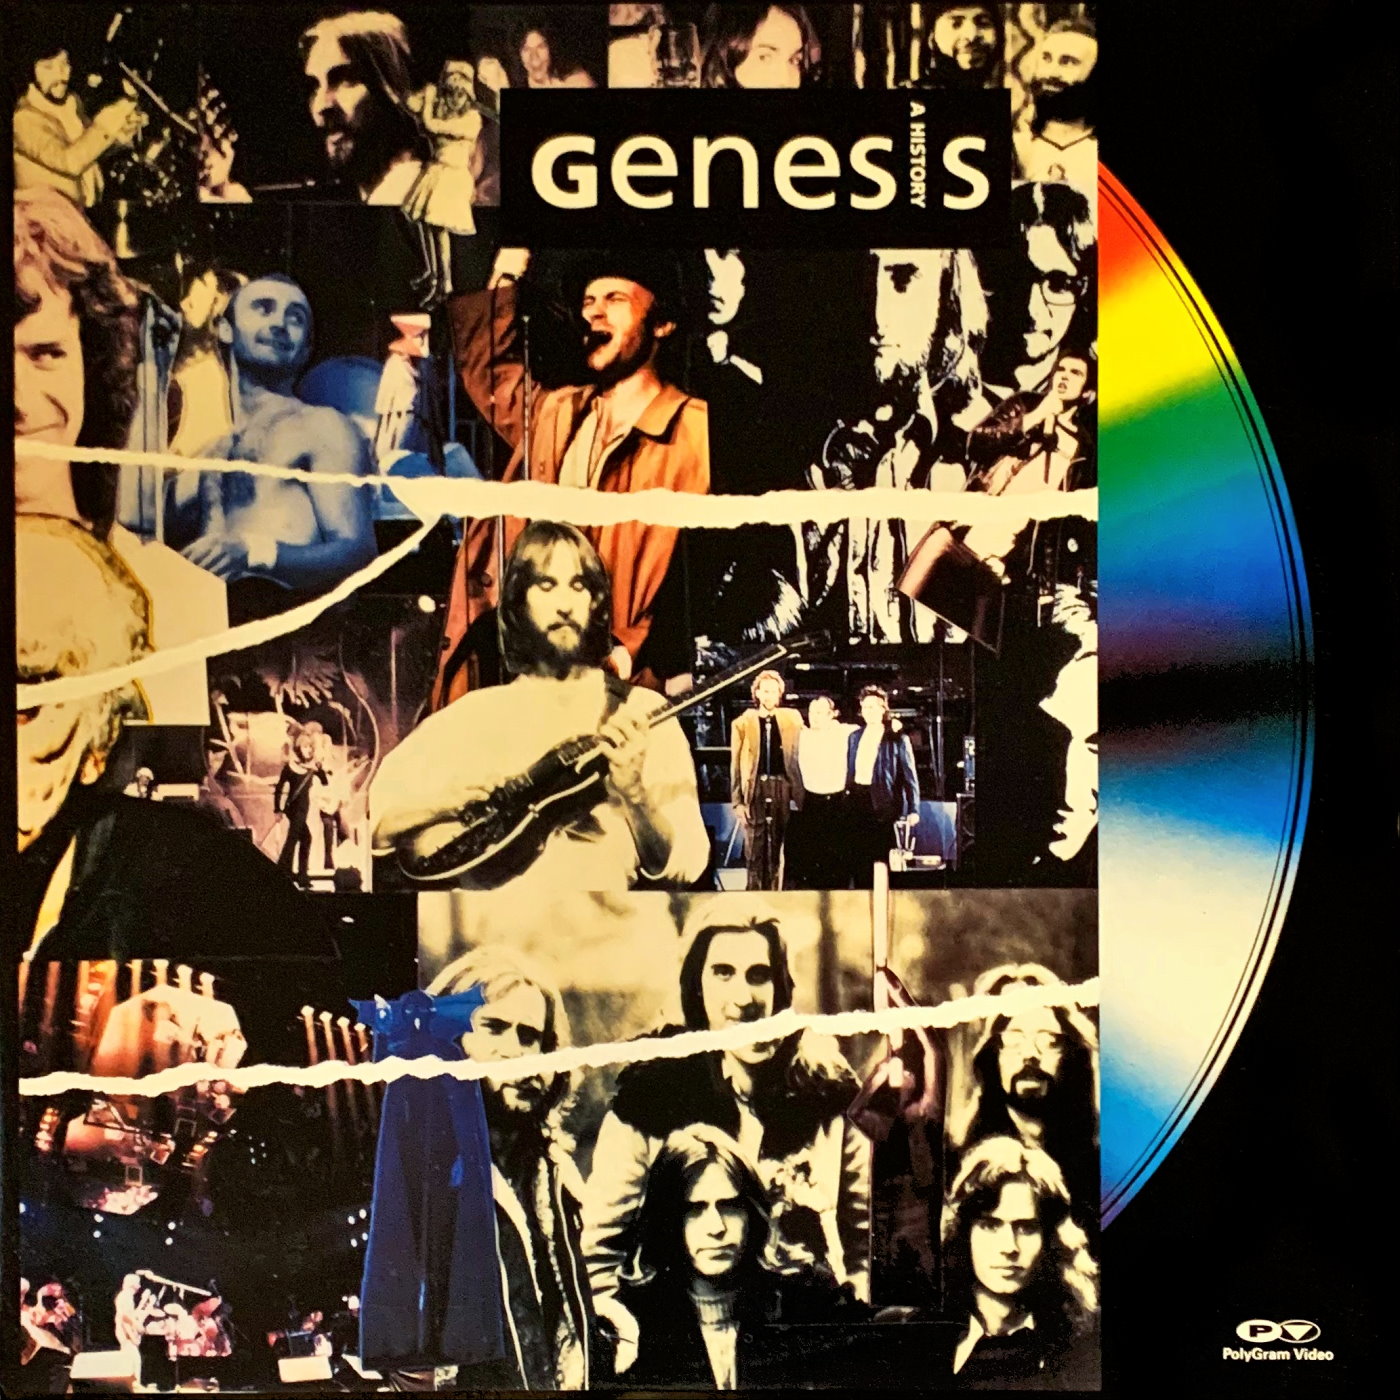 Cover - Genesis - A History.jpg